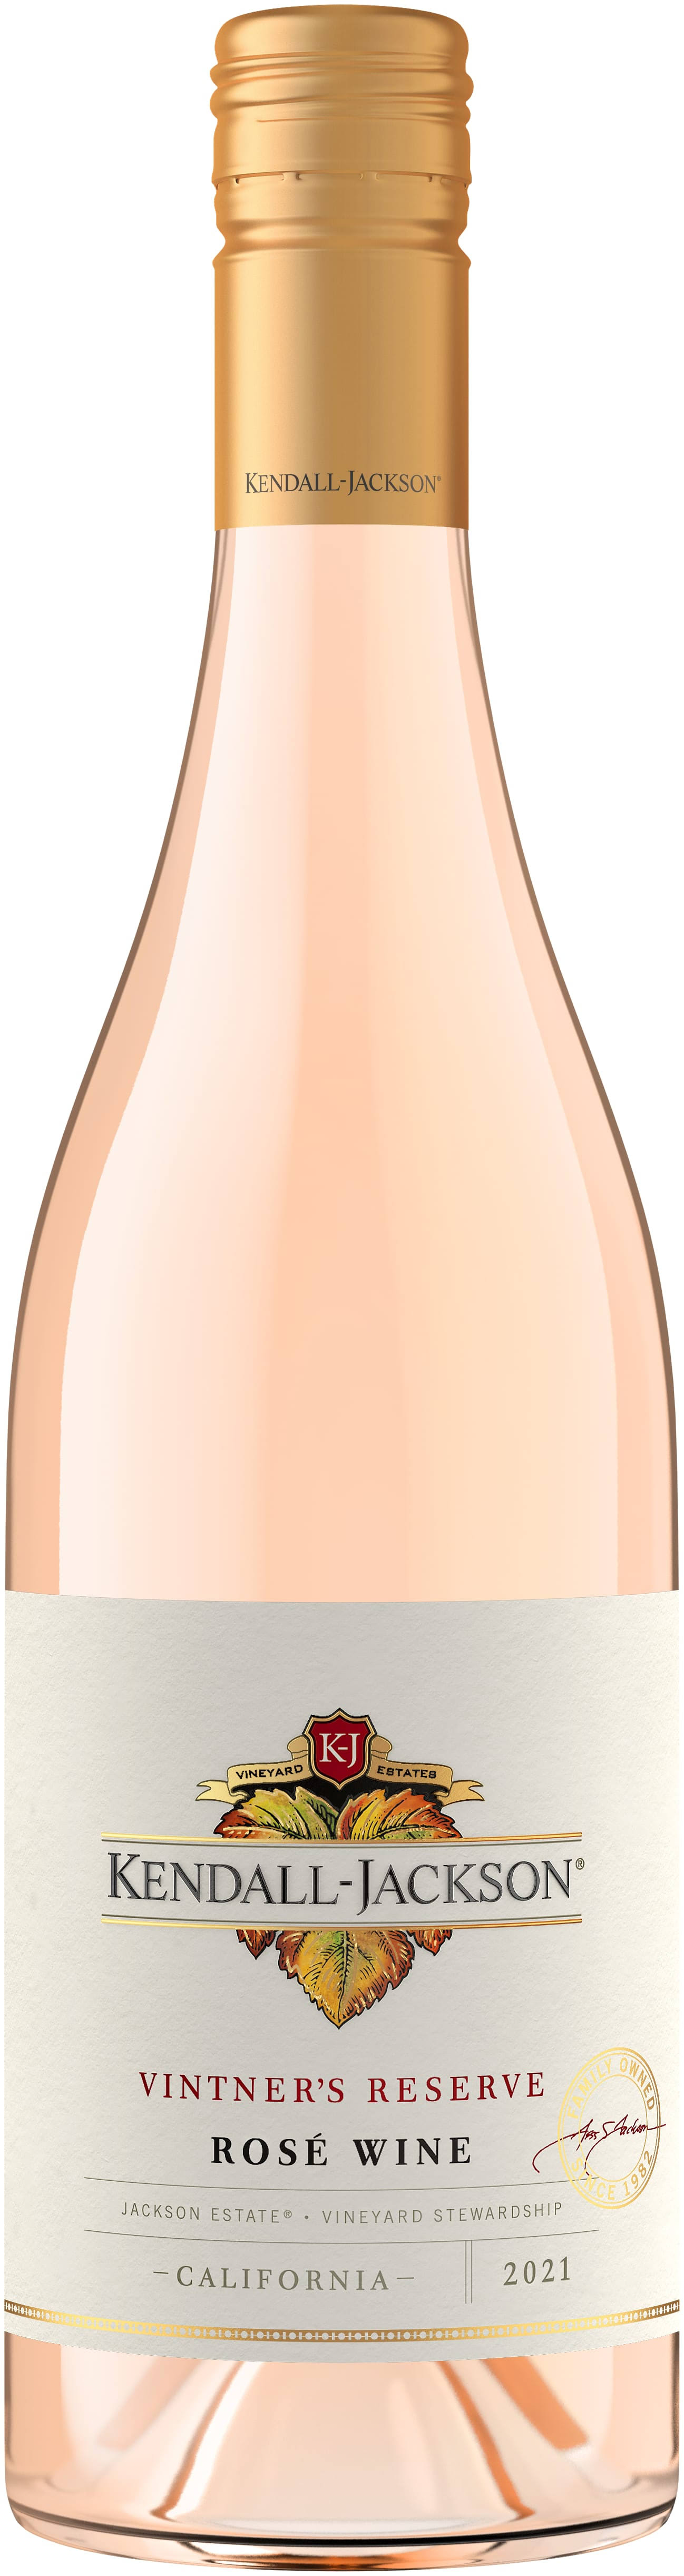 Kendall-Jackson Rose Wine, Vintner’s Reserve - 750 ml